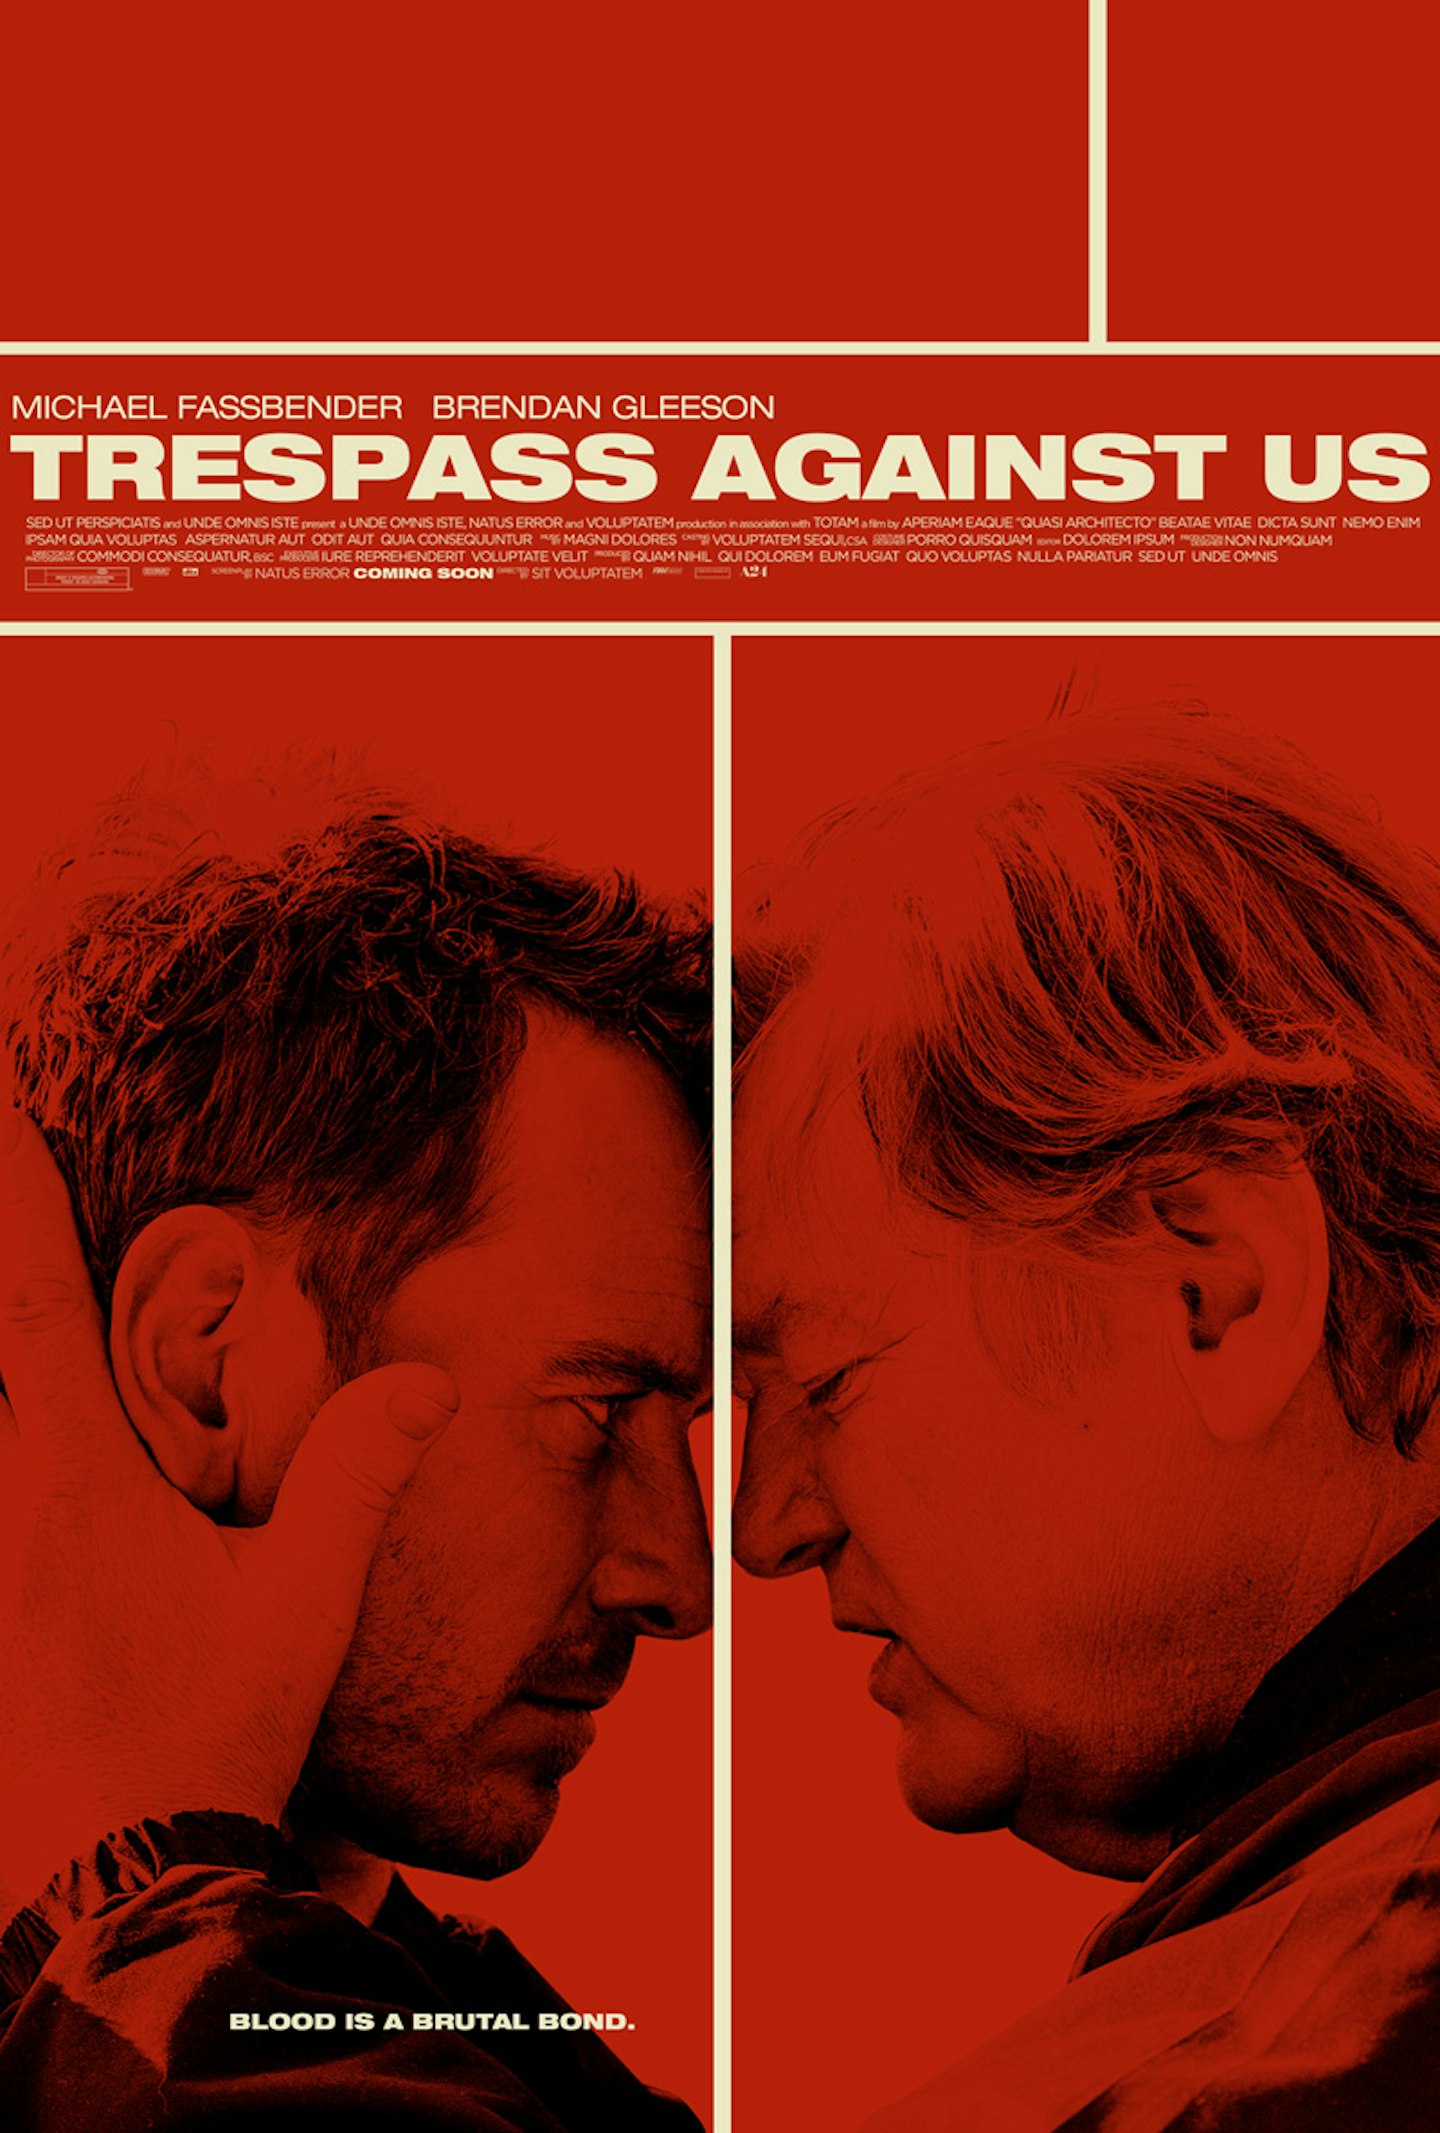 New Trespass Against Us poster